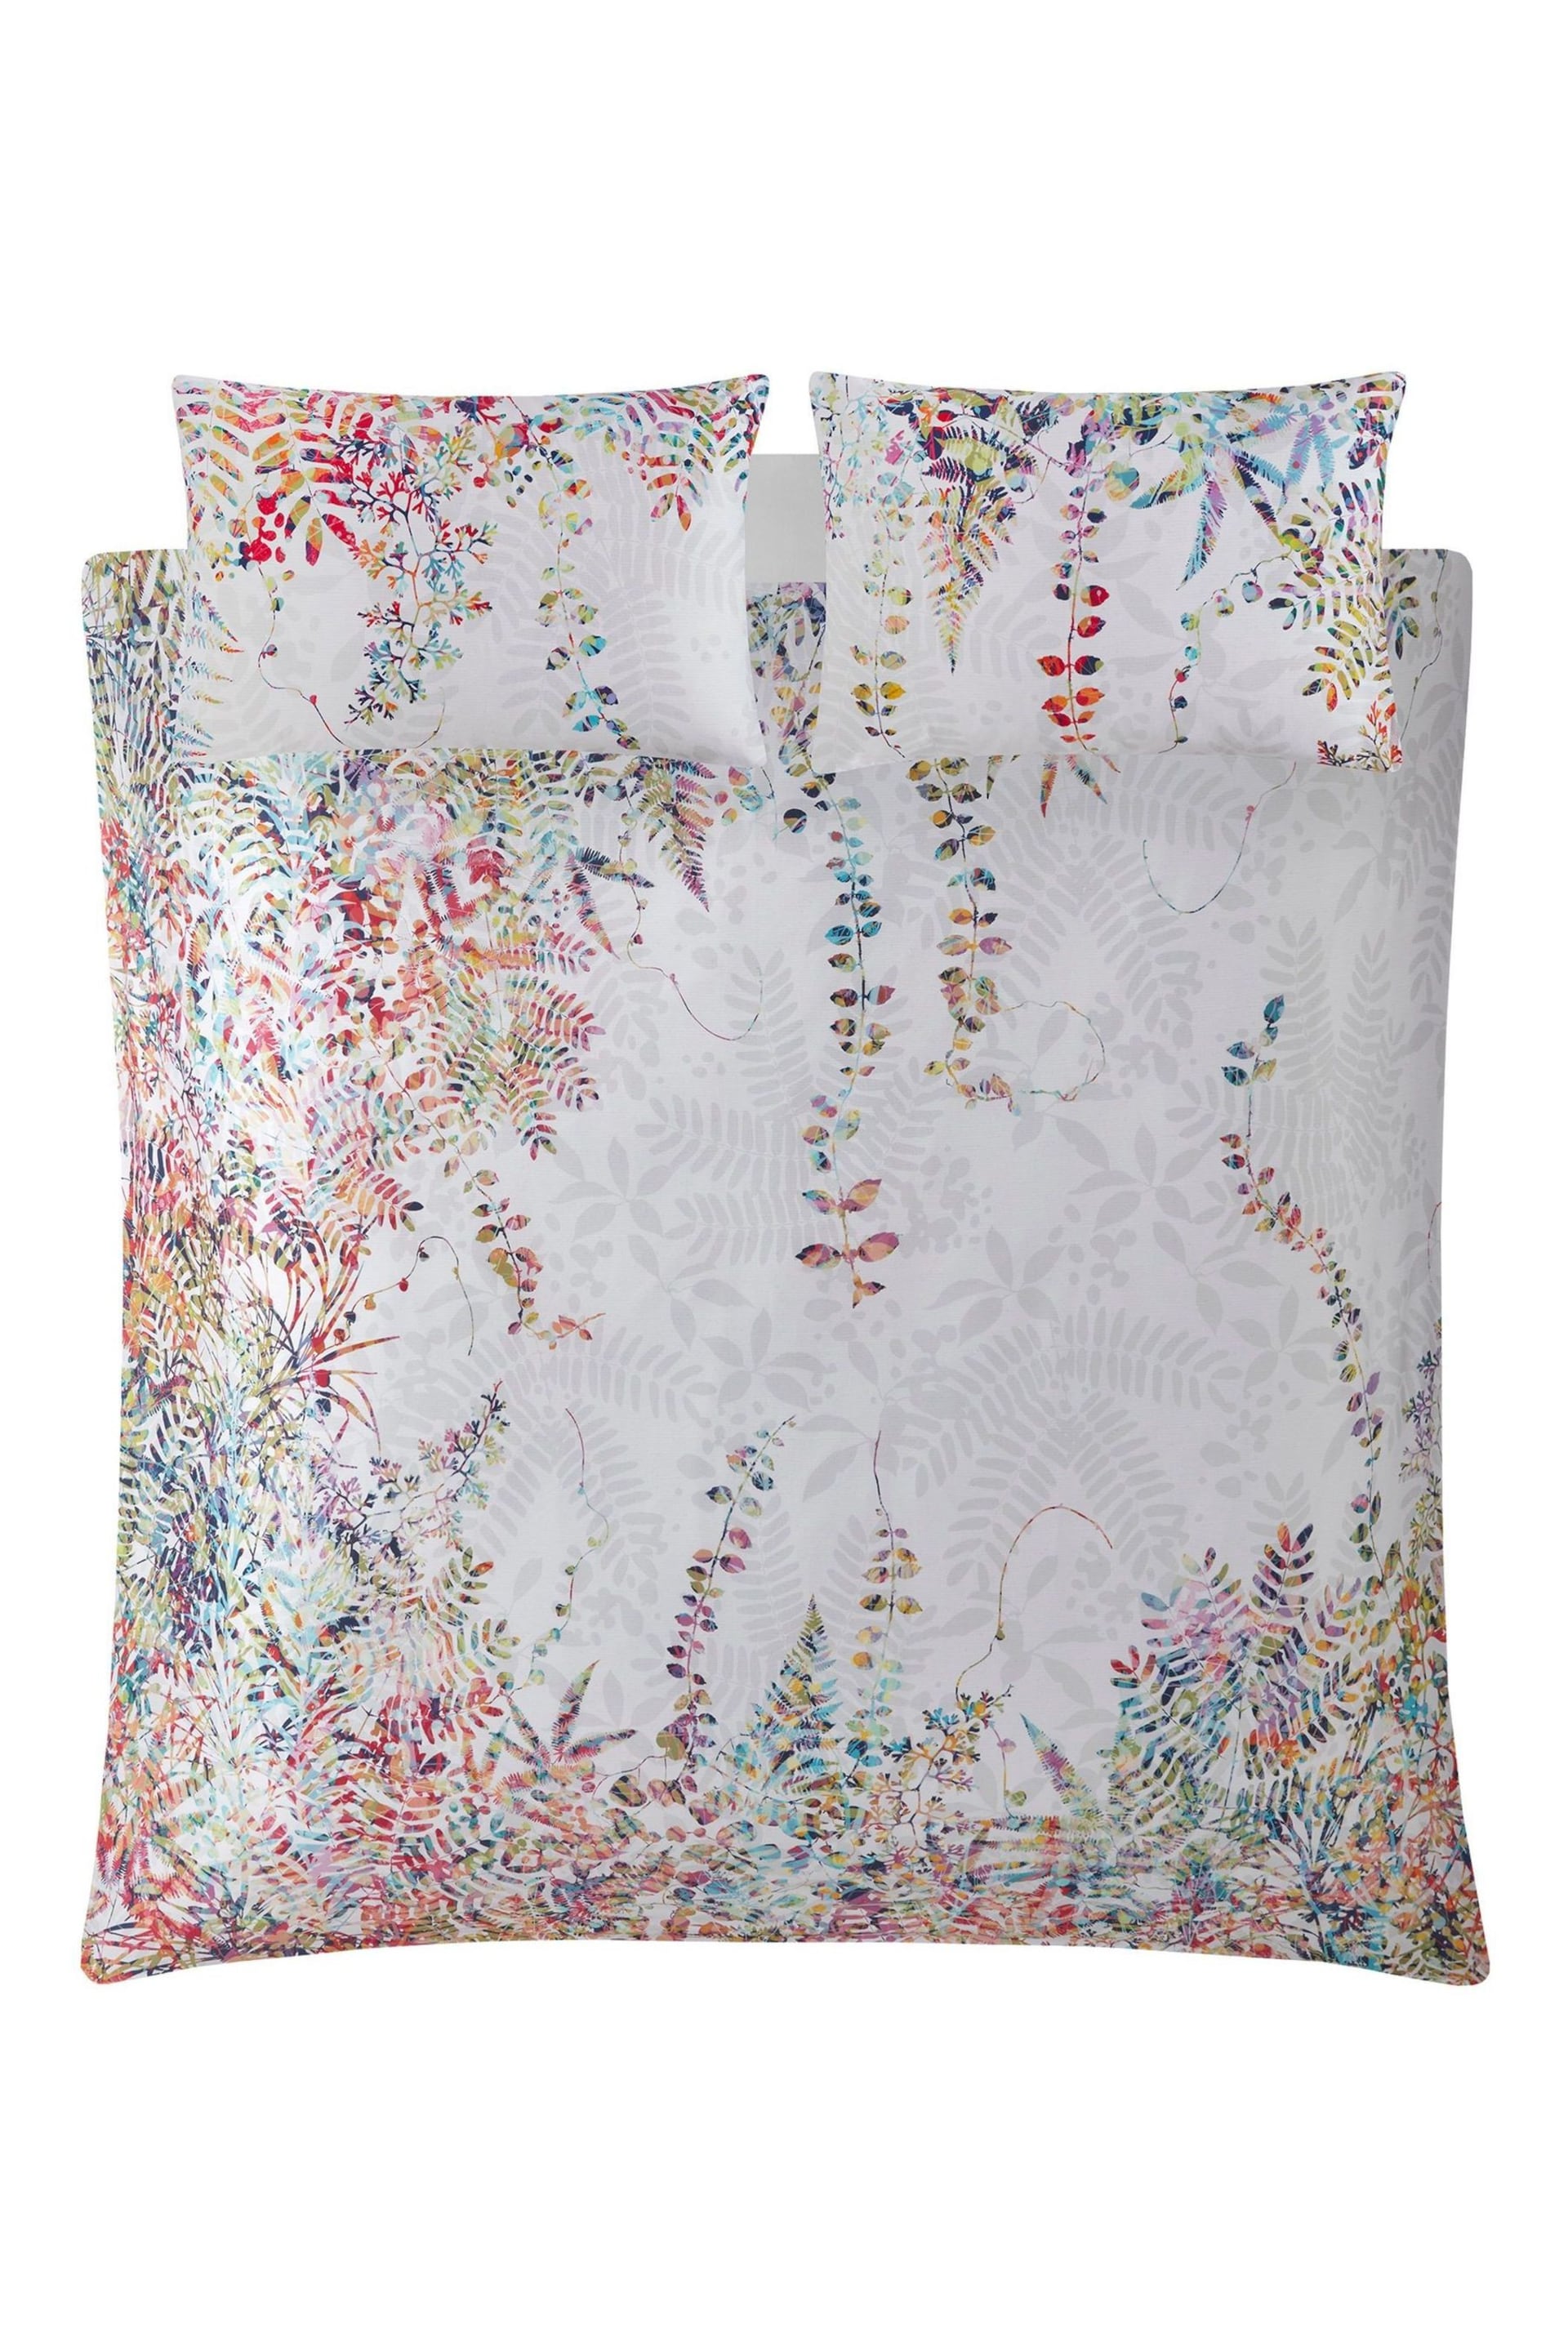 Clarissa Hulse Cream Cascading Kaleidoscope Duvet Cover and Pillowcase Set - Image 3 of 4